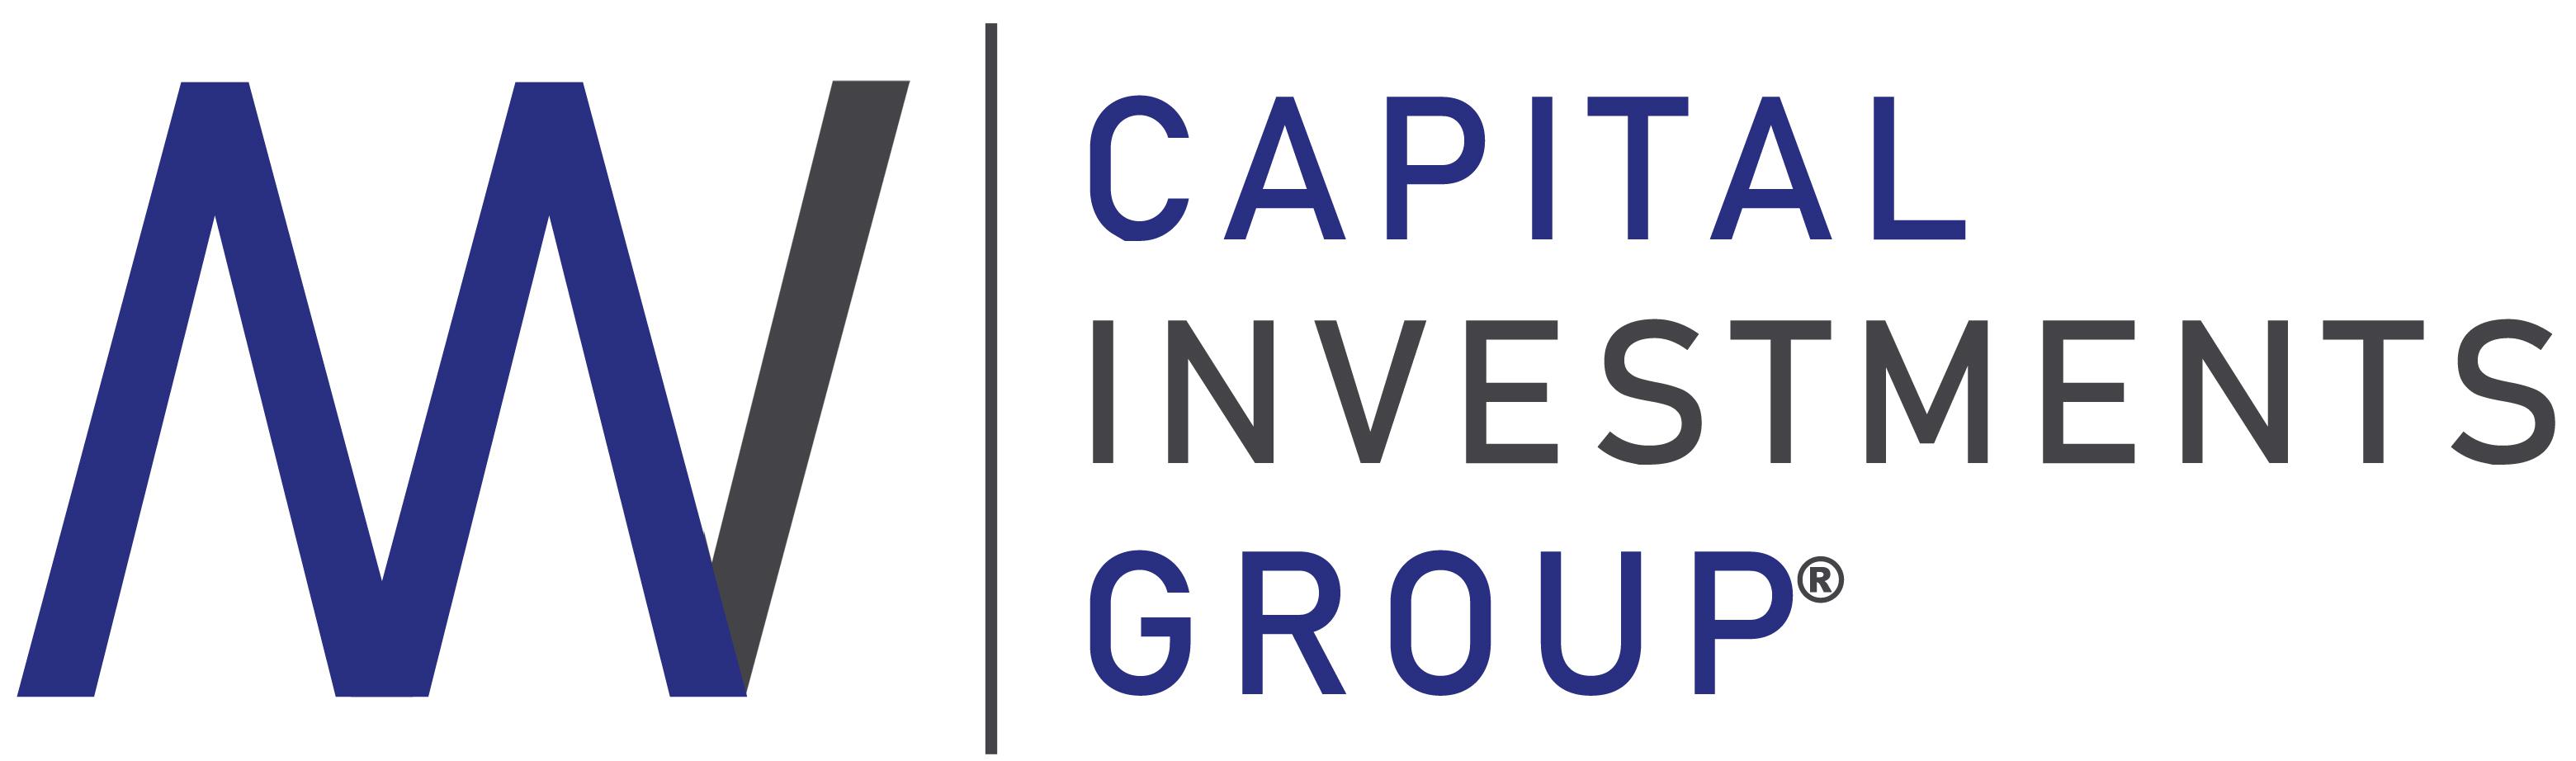 MV Capital Investments Group®️ Logo